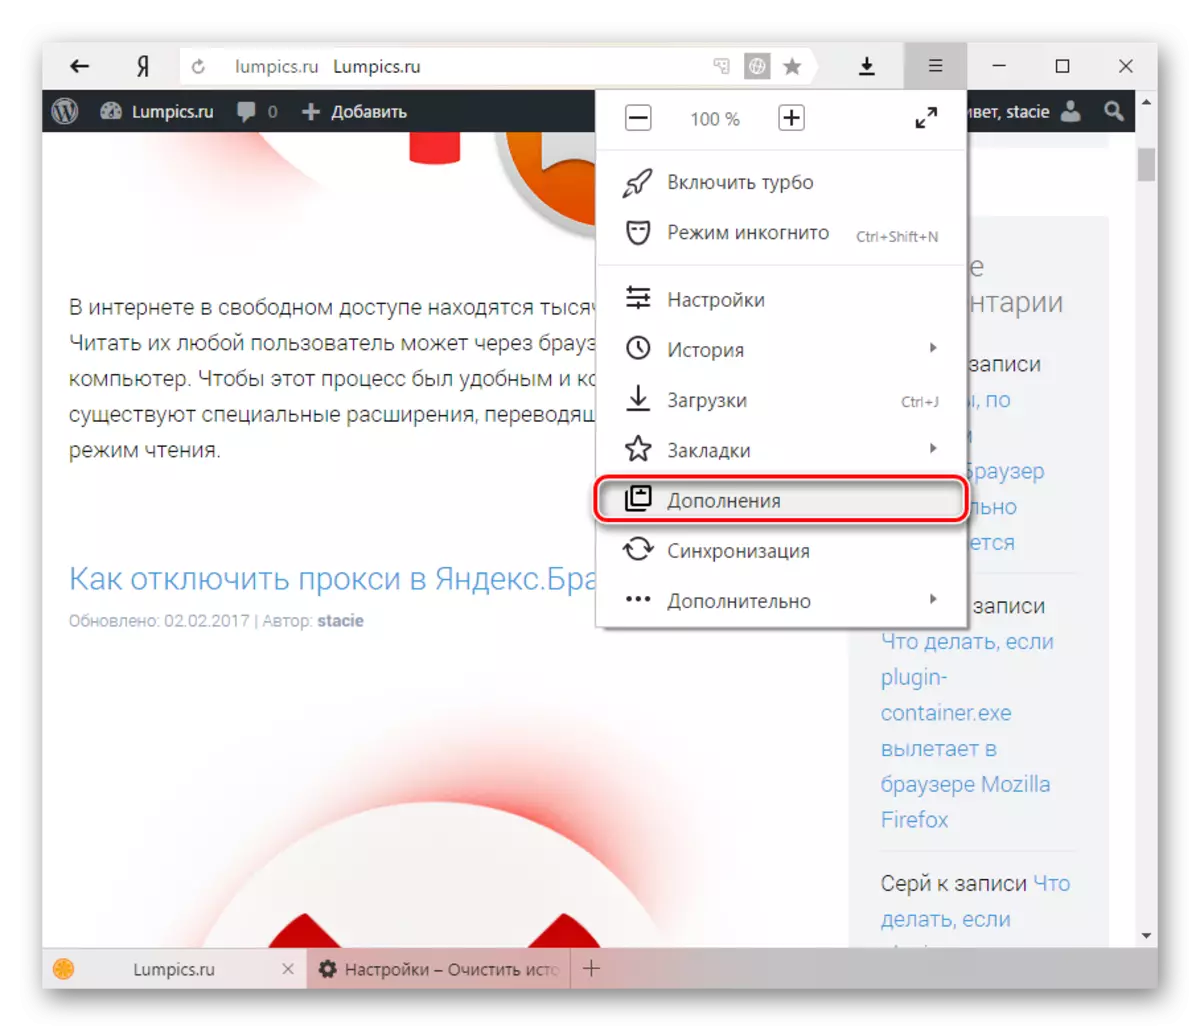 Yandex.browser मध्ये पूरक